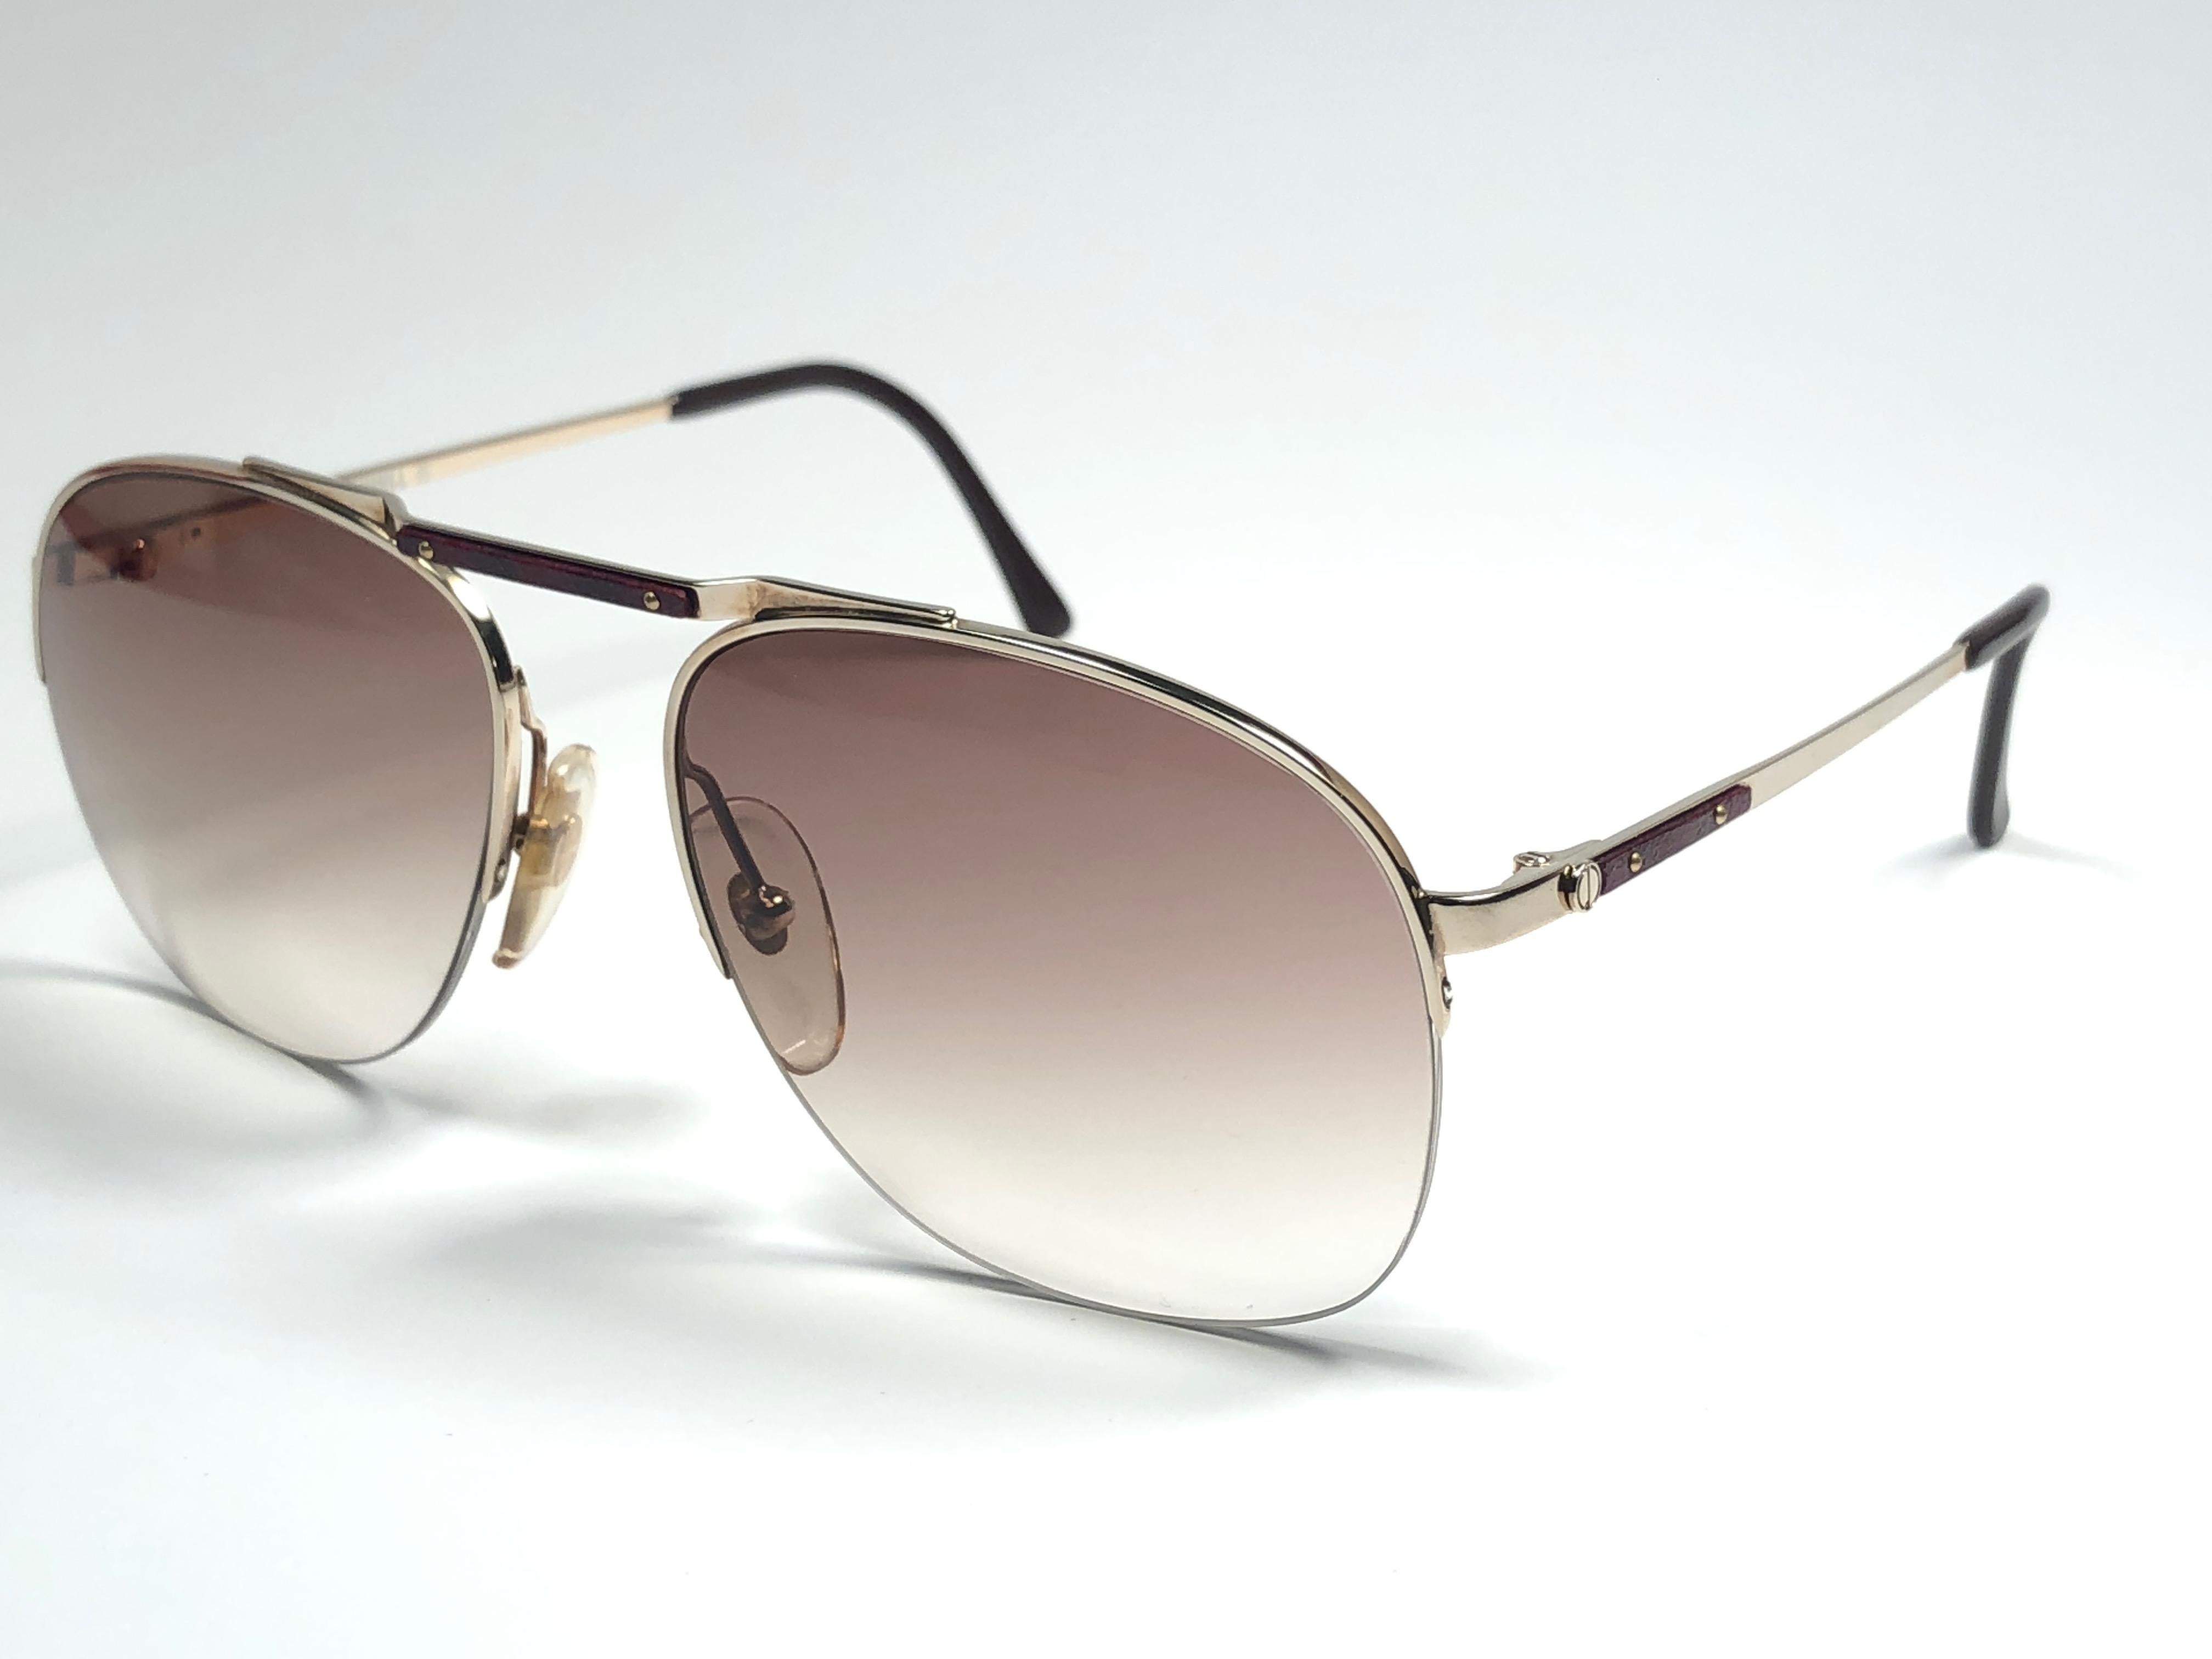 1980 dunhill sunglasses